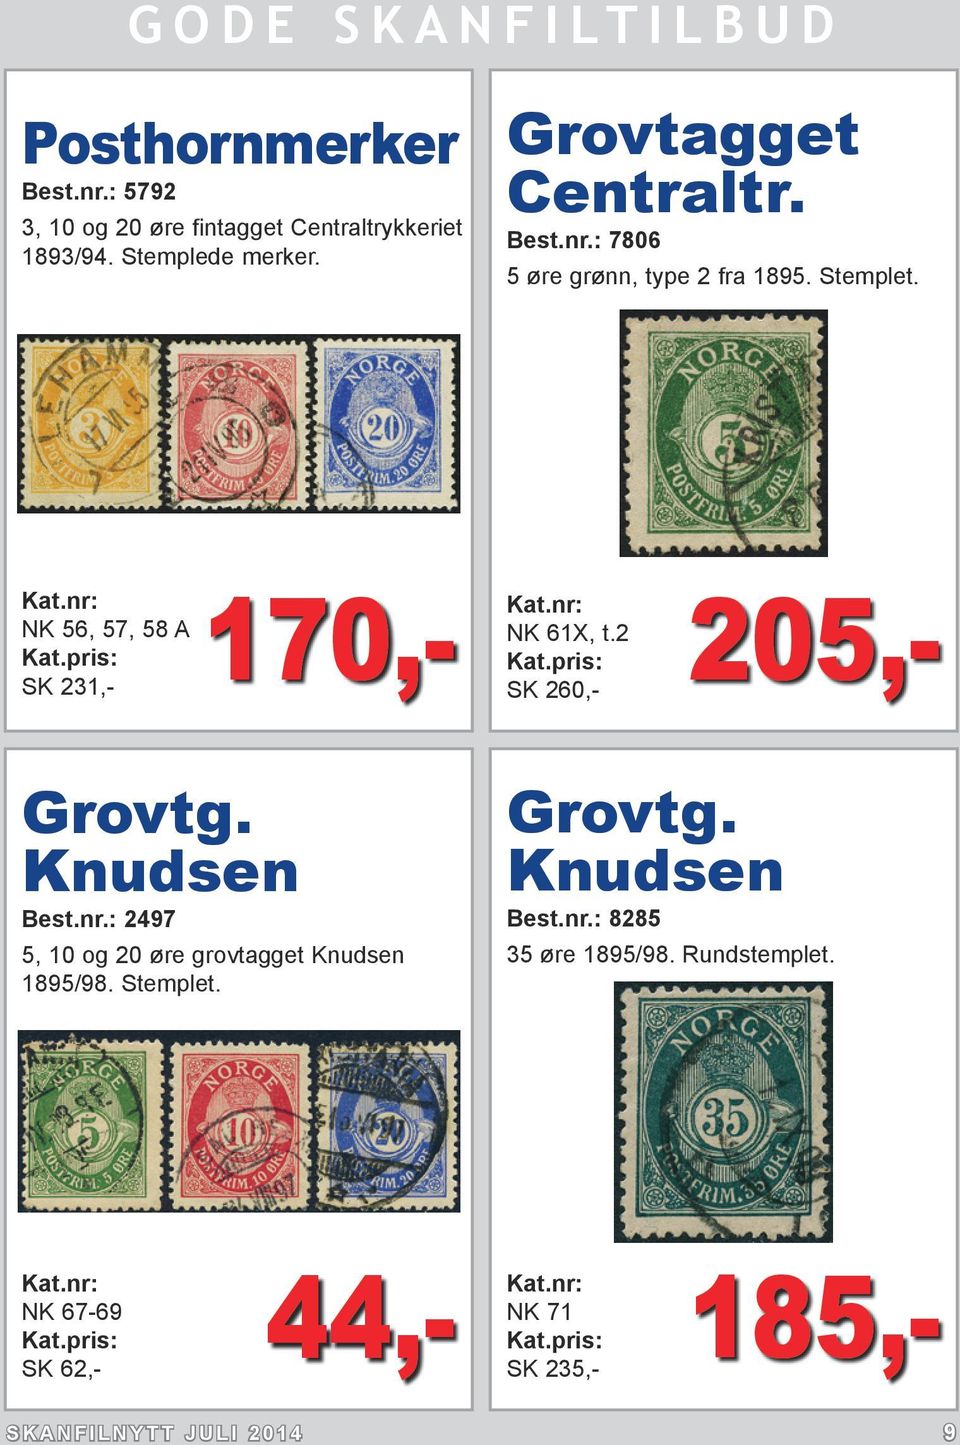 2 SK 260,- NK 56, 57, 58 A SK 231,- 205,- Grovtg. Knudsen Best.nr.